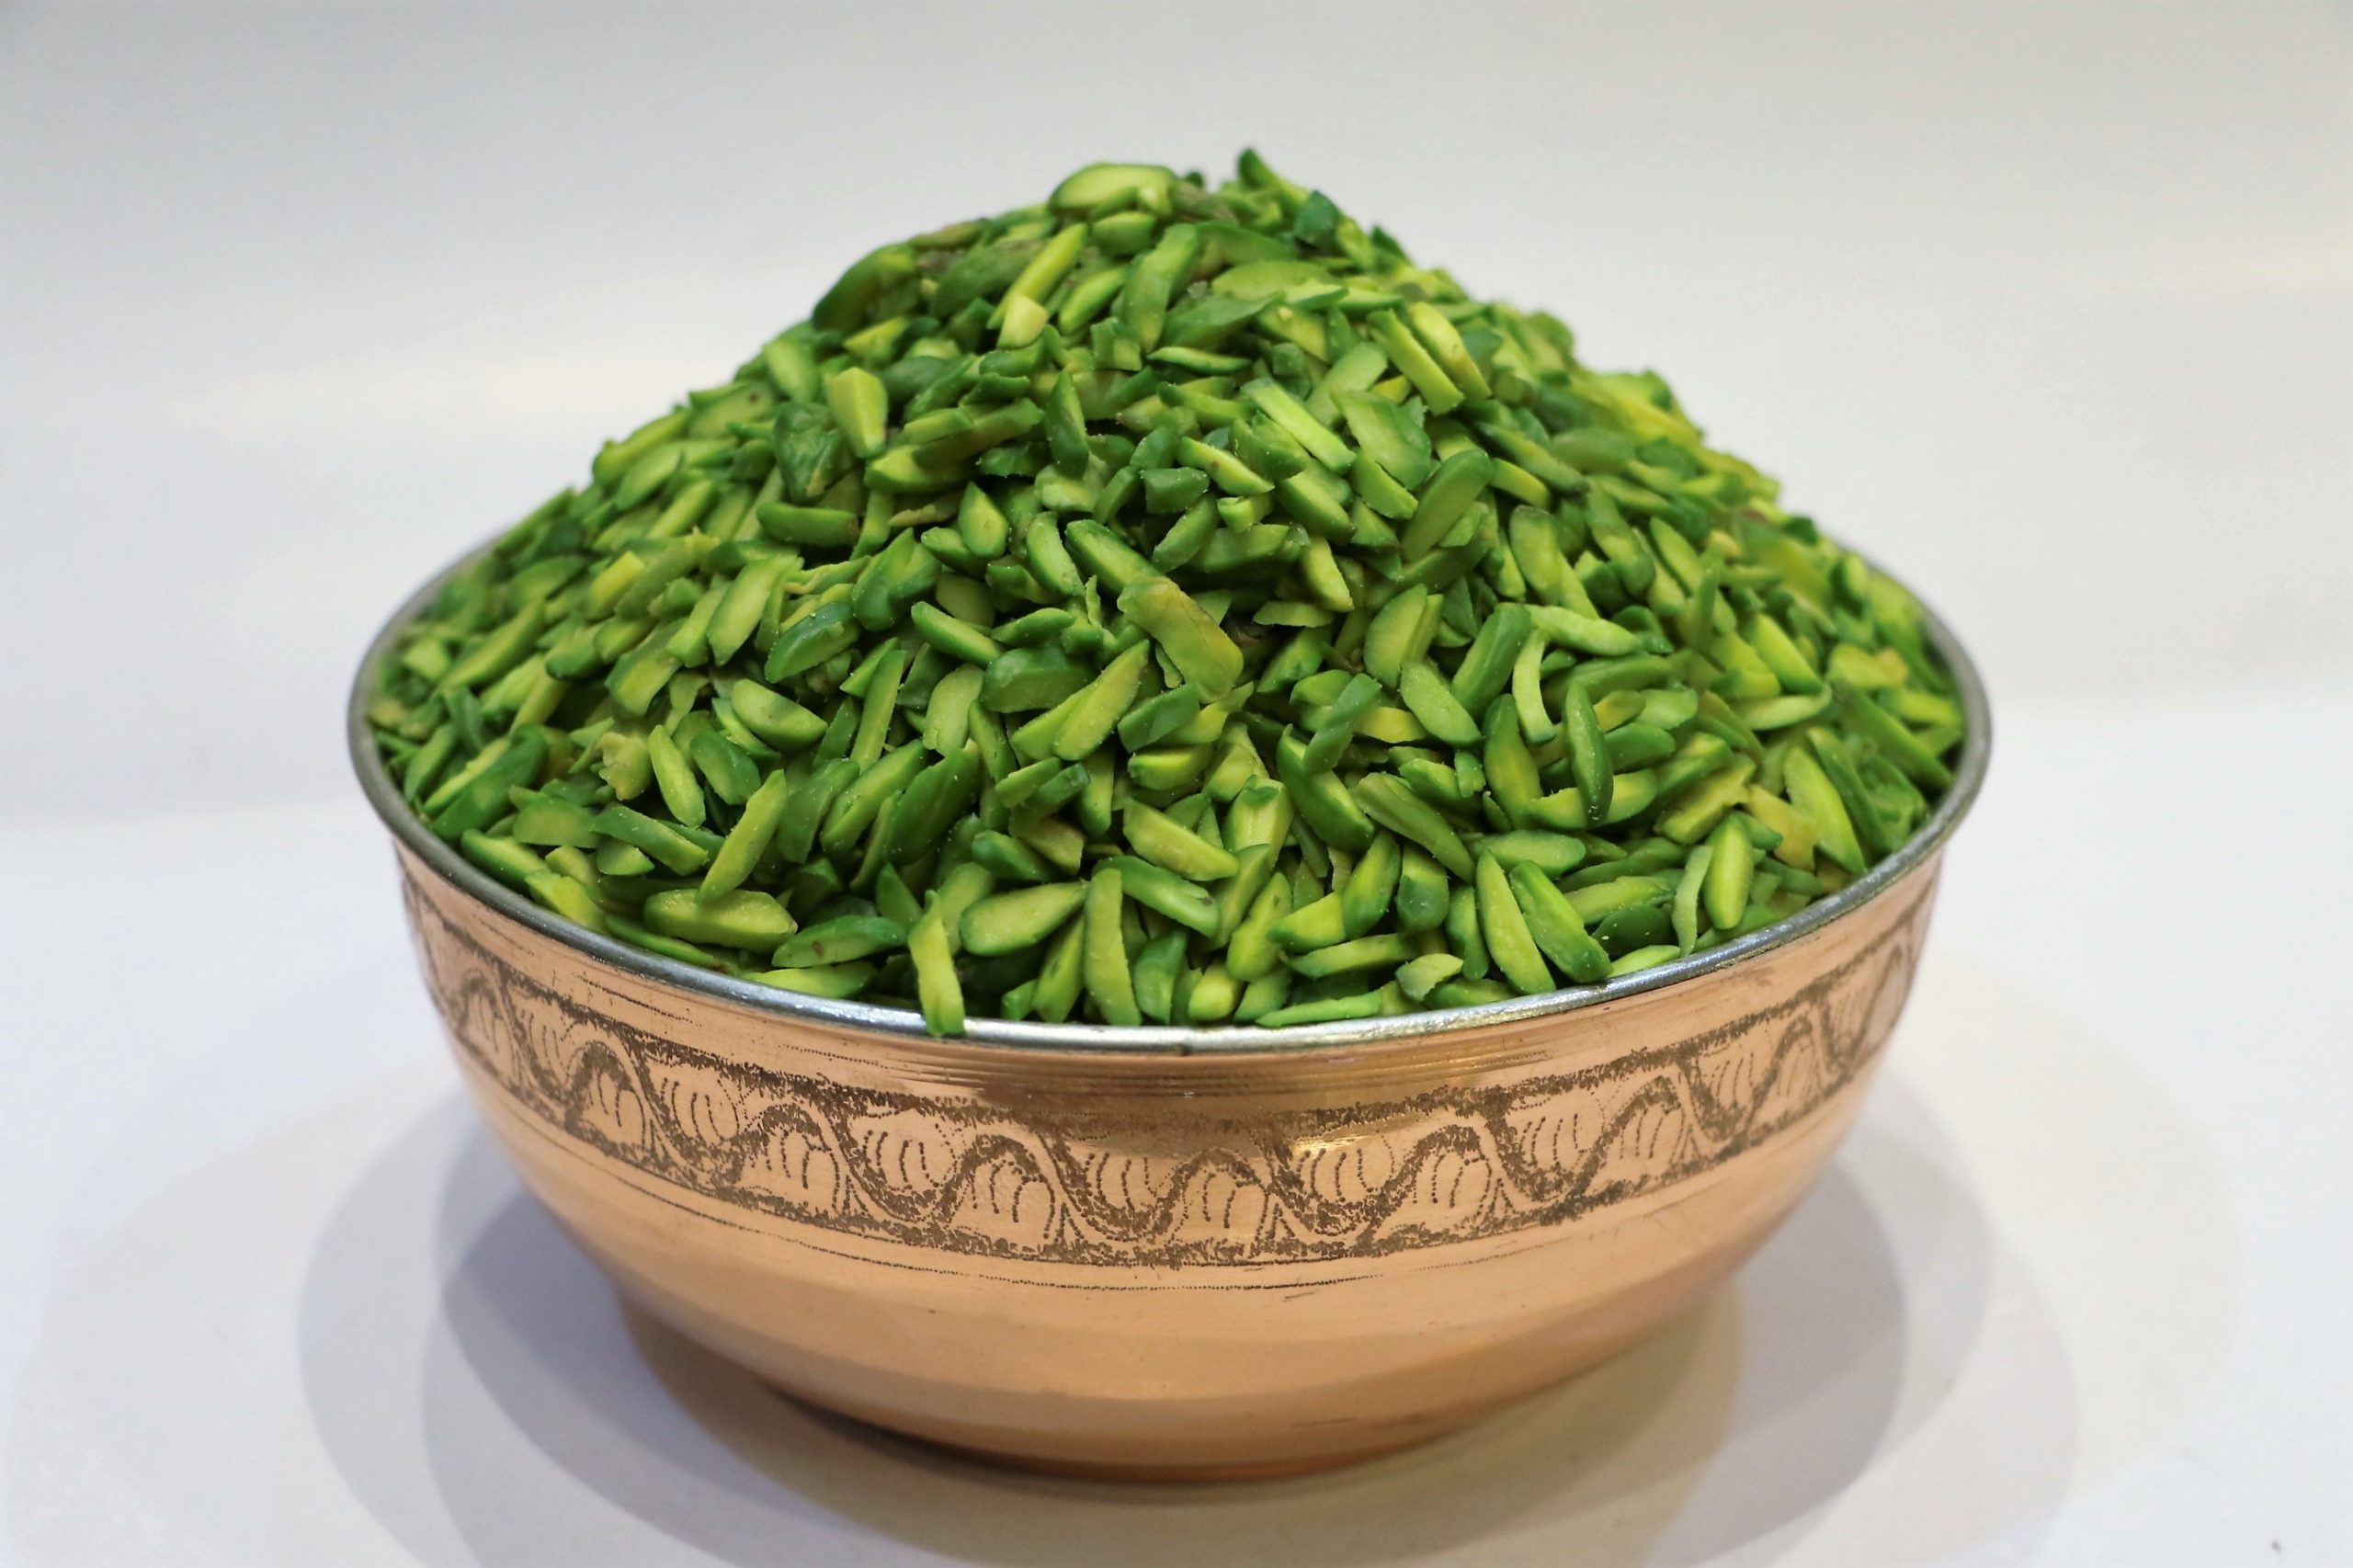 Direct supply of Qazvin green pistachio slices